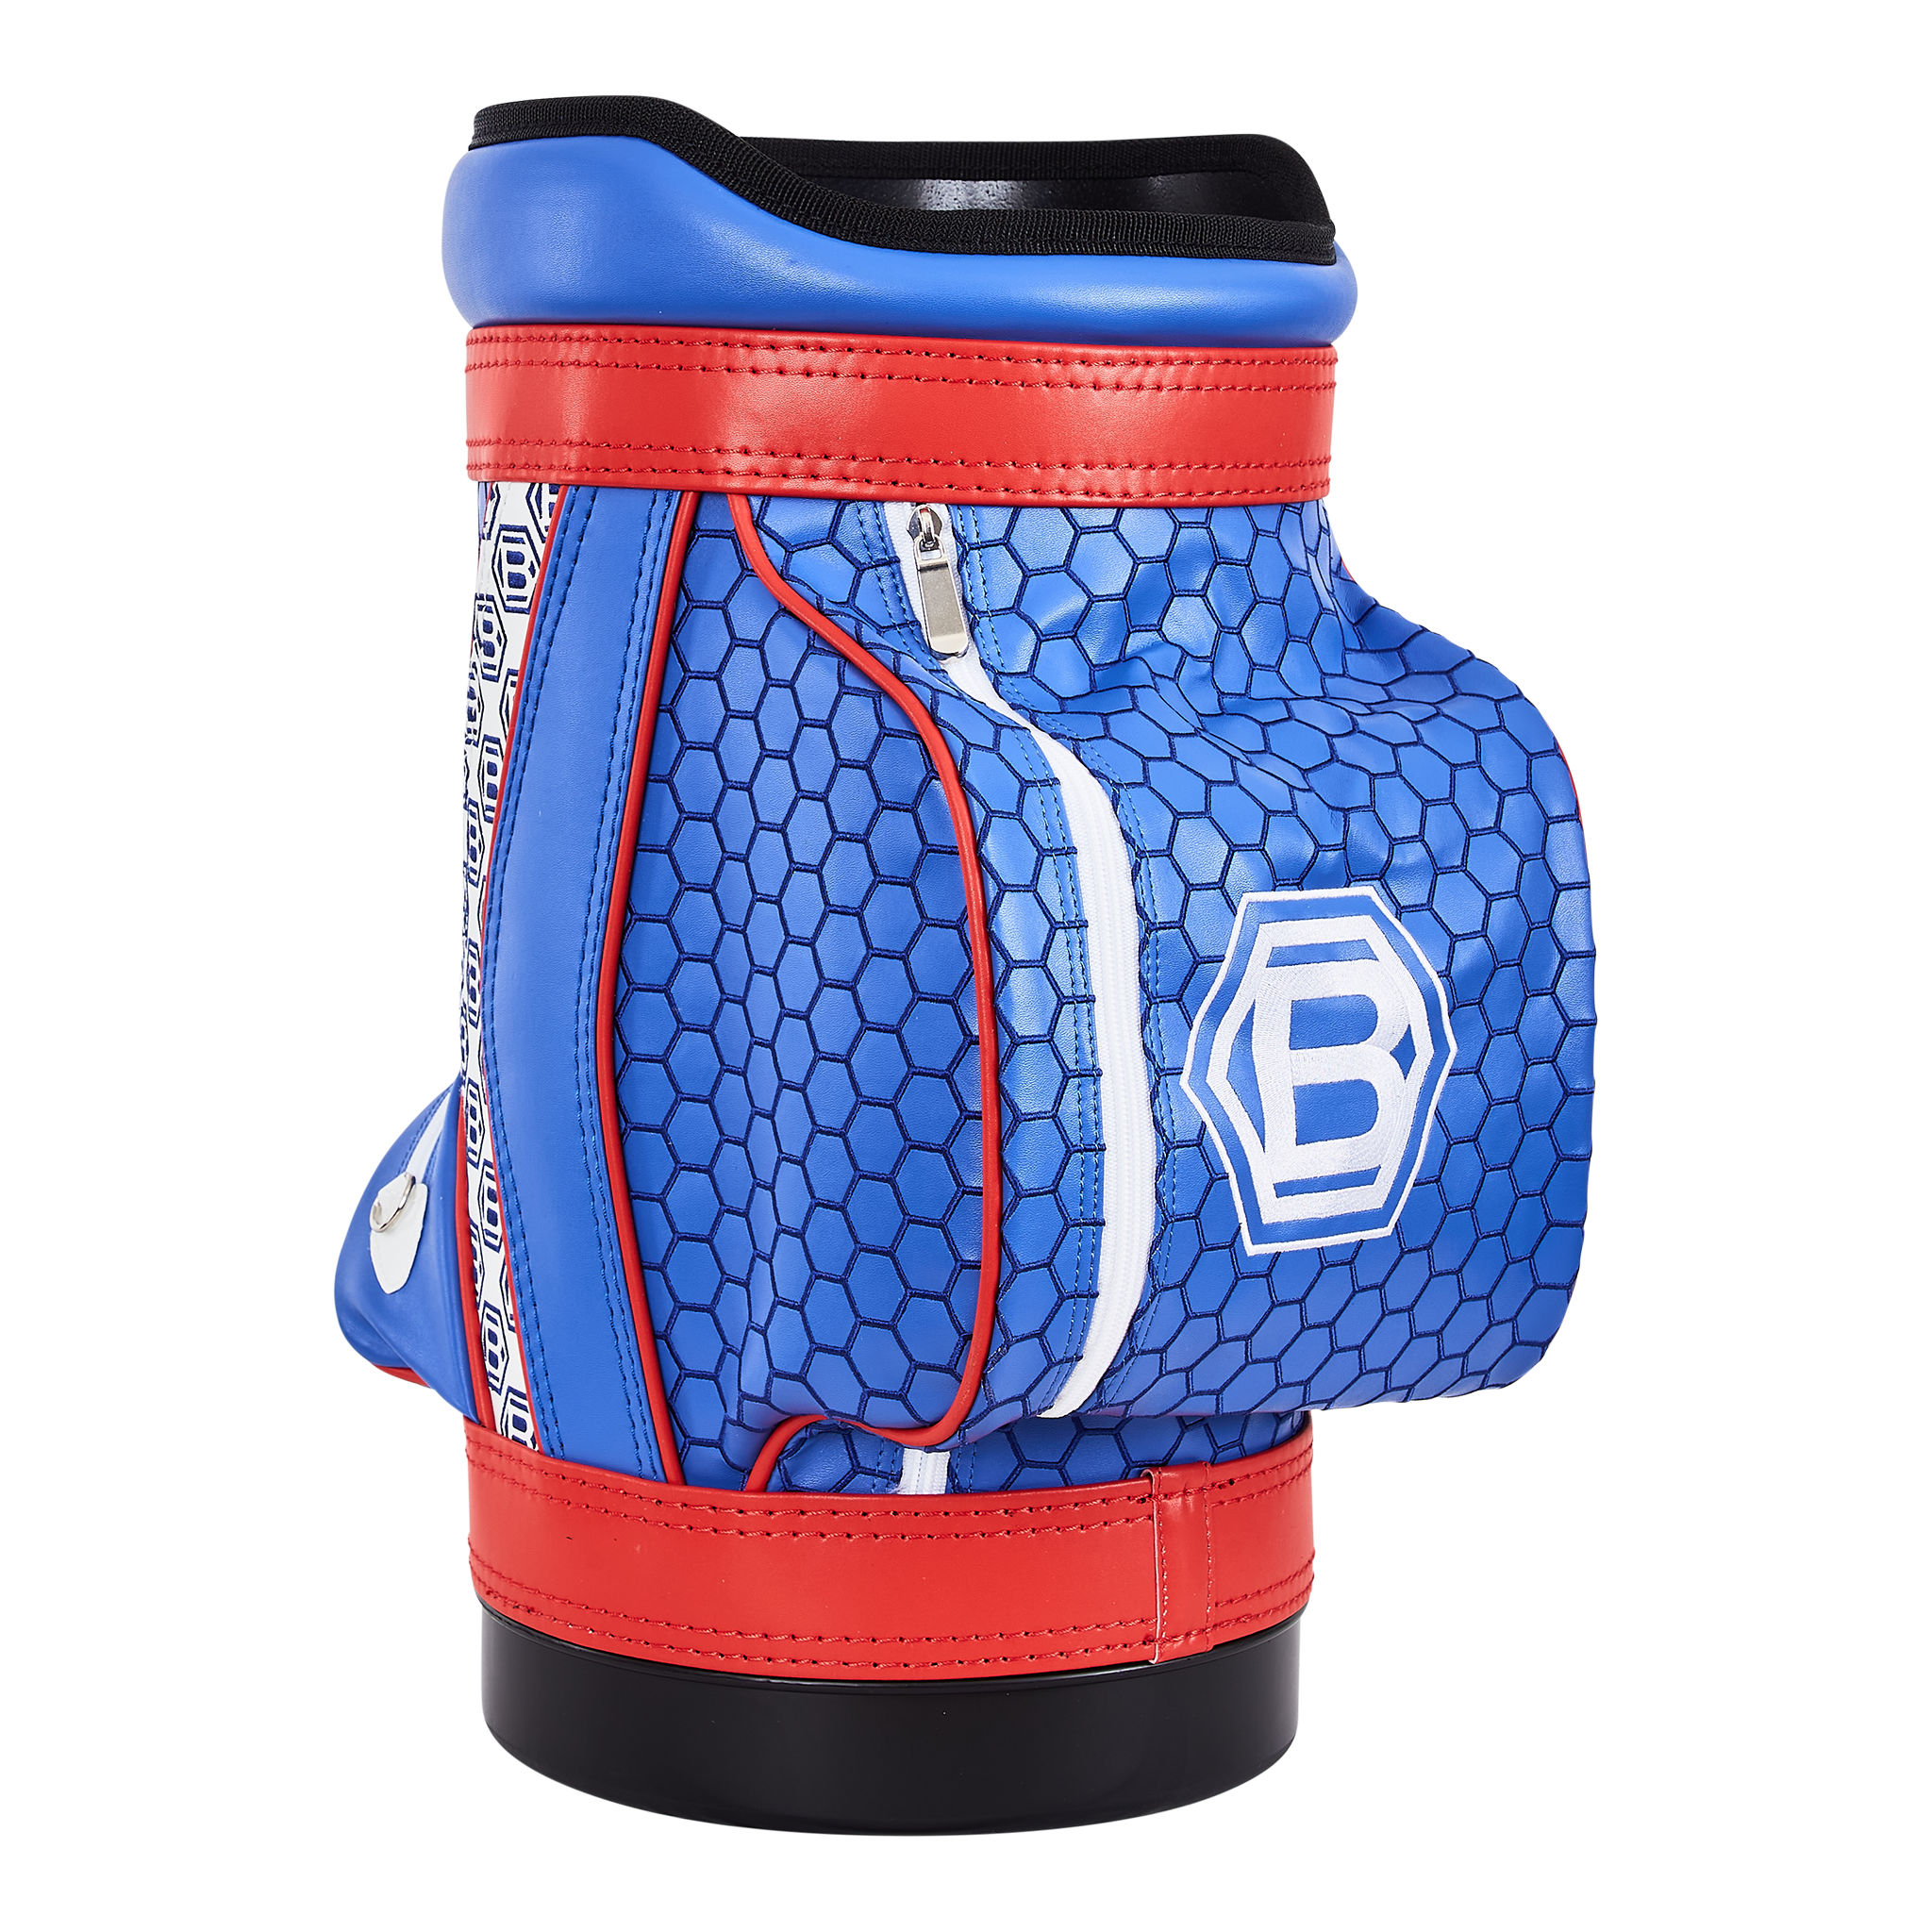 Bettinardi Den Caddy Bettinardi Golf Bag (Blue/Red) - Back